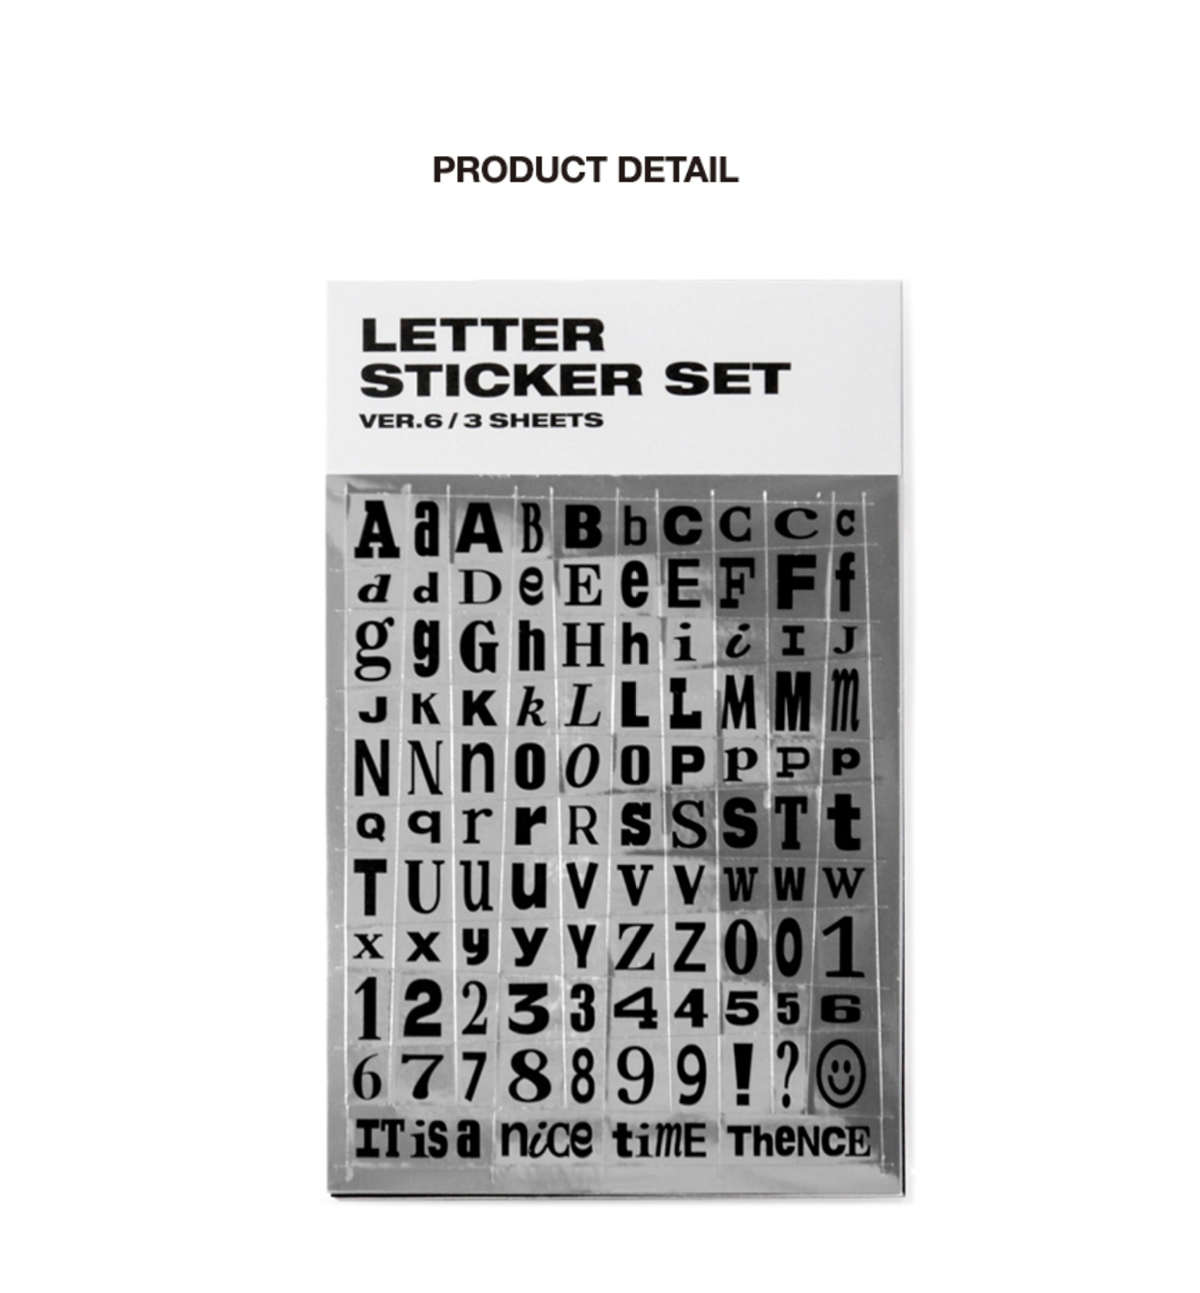 Letter Sticker Set Ver.6